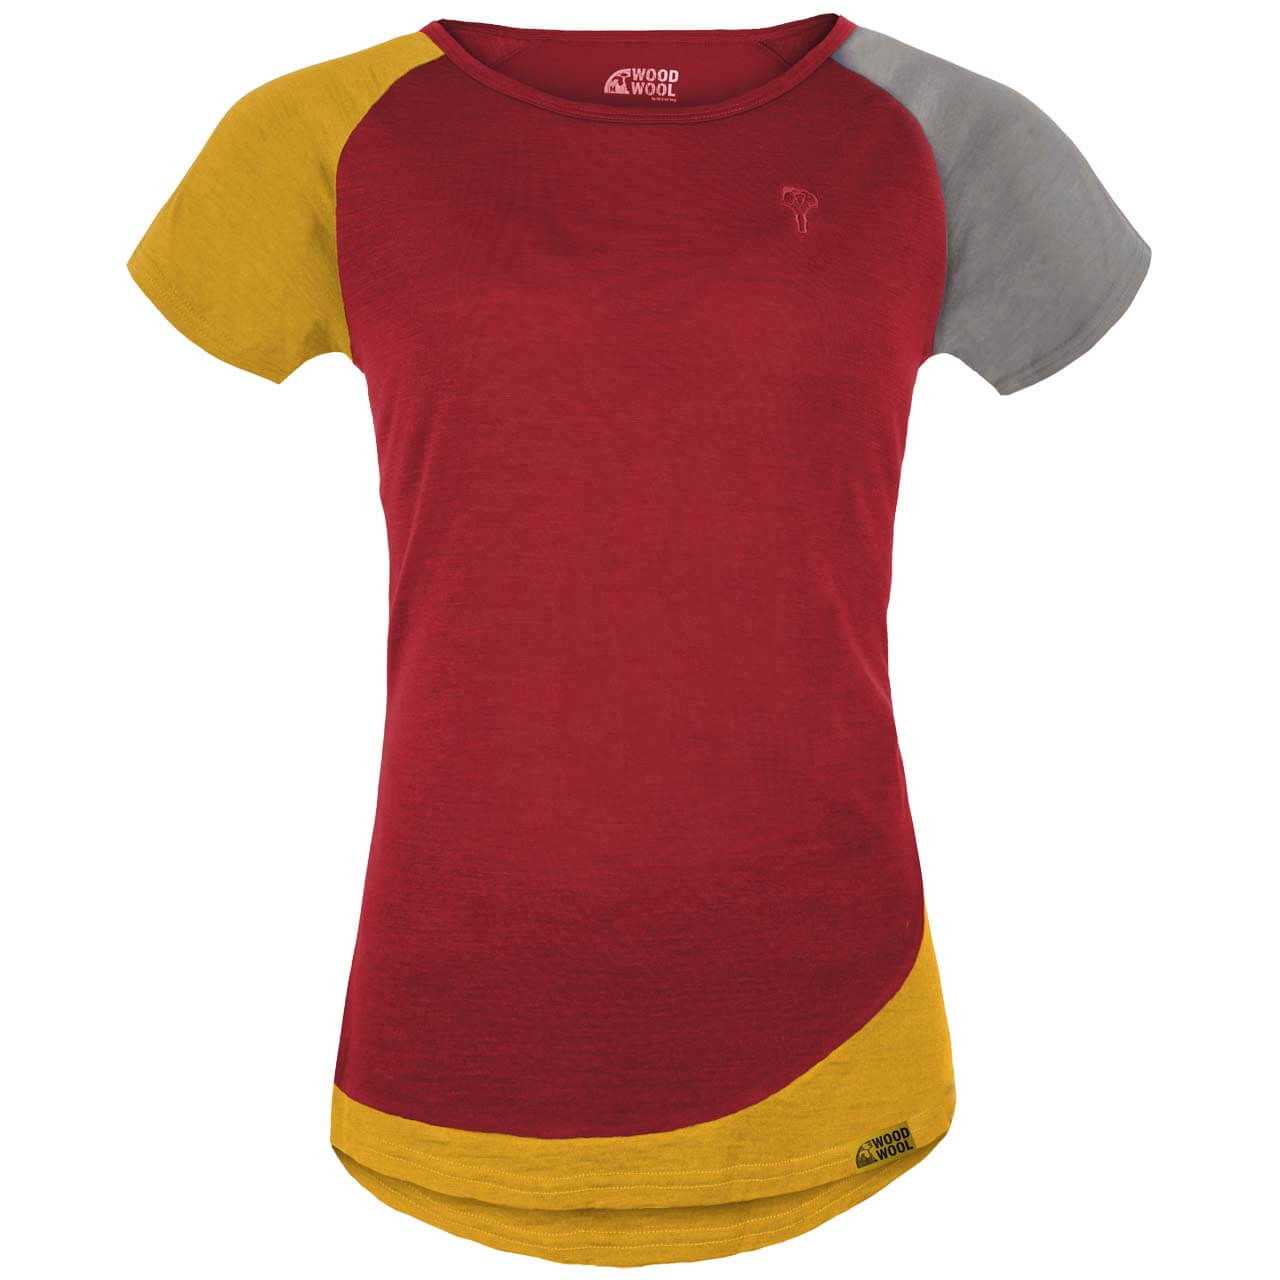 Grüezi Bag WoodWool Janeway T-Shirt - Fired Red Brick, S von Grüezi Bag